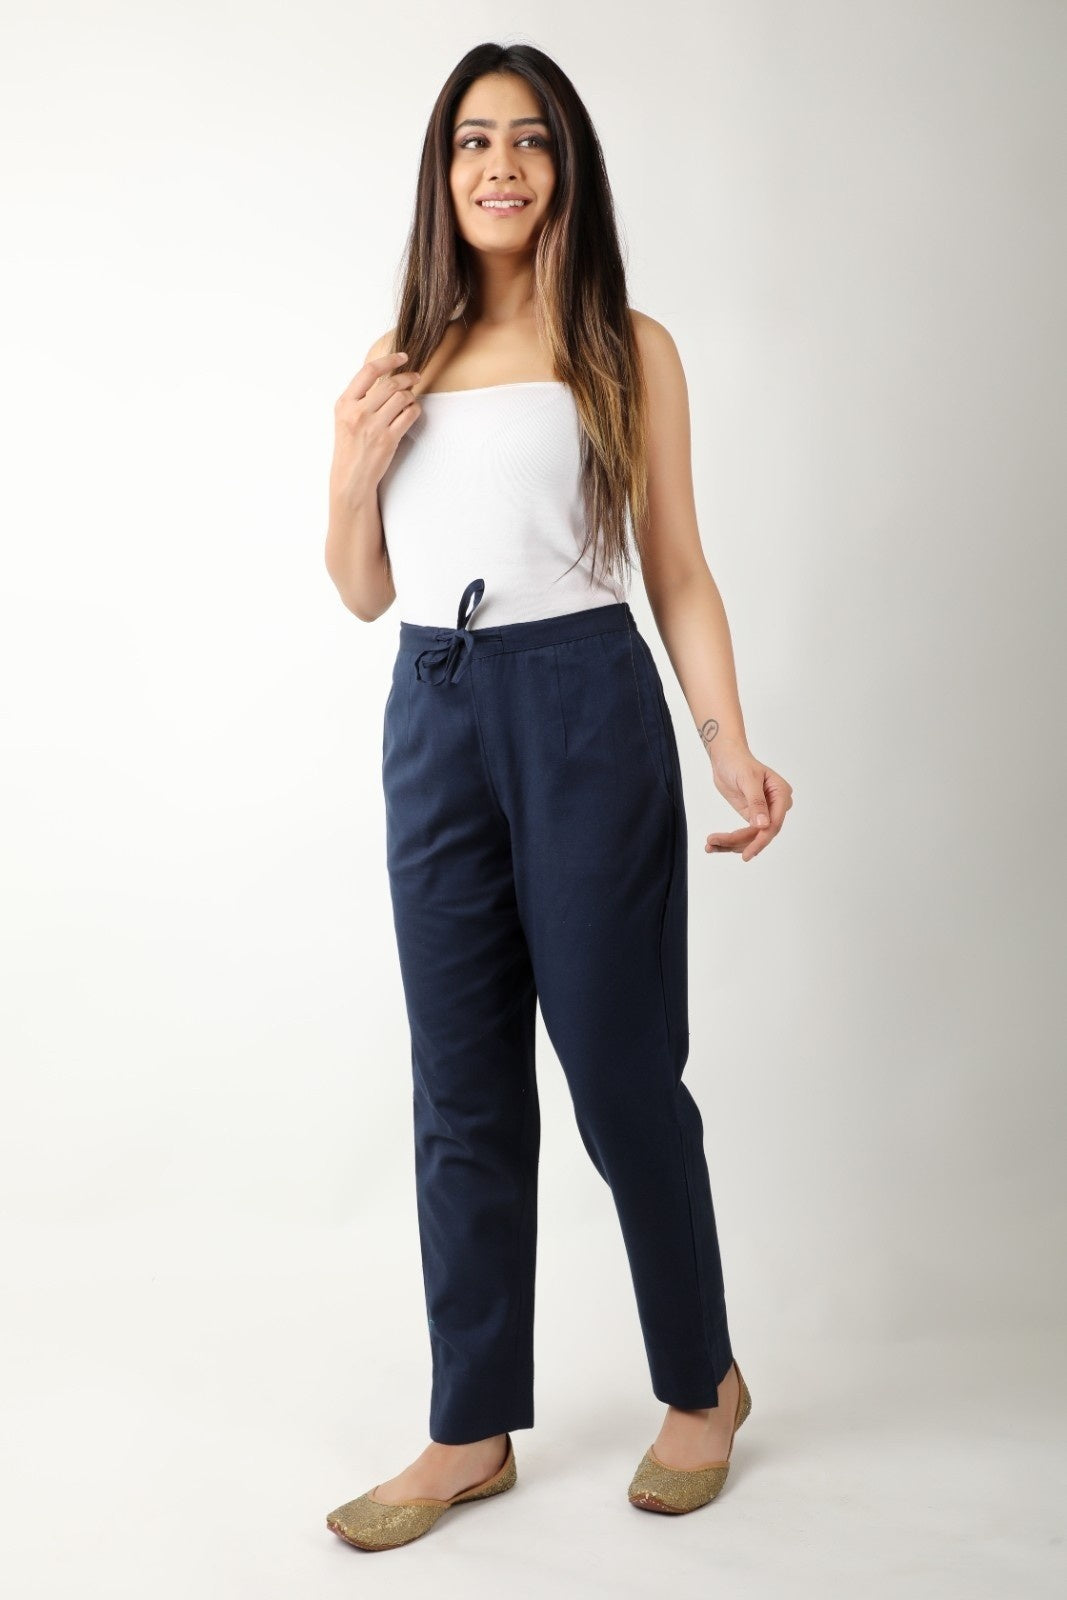 Buy Women Navy Blue Trousers online in India- Akshalifestyle